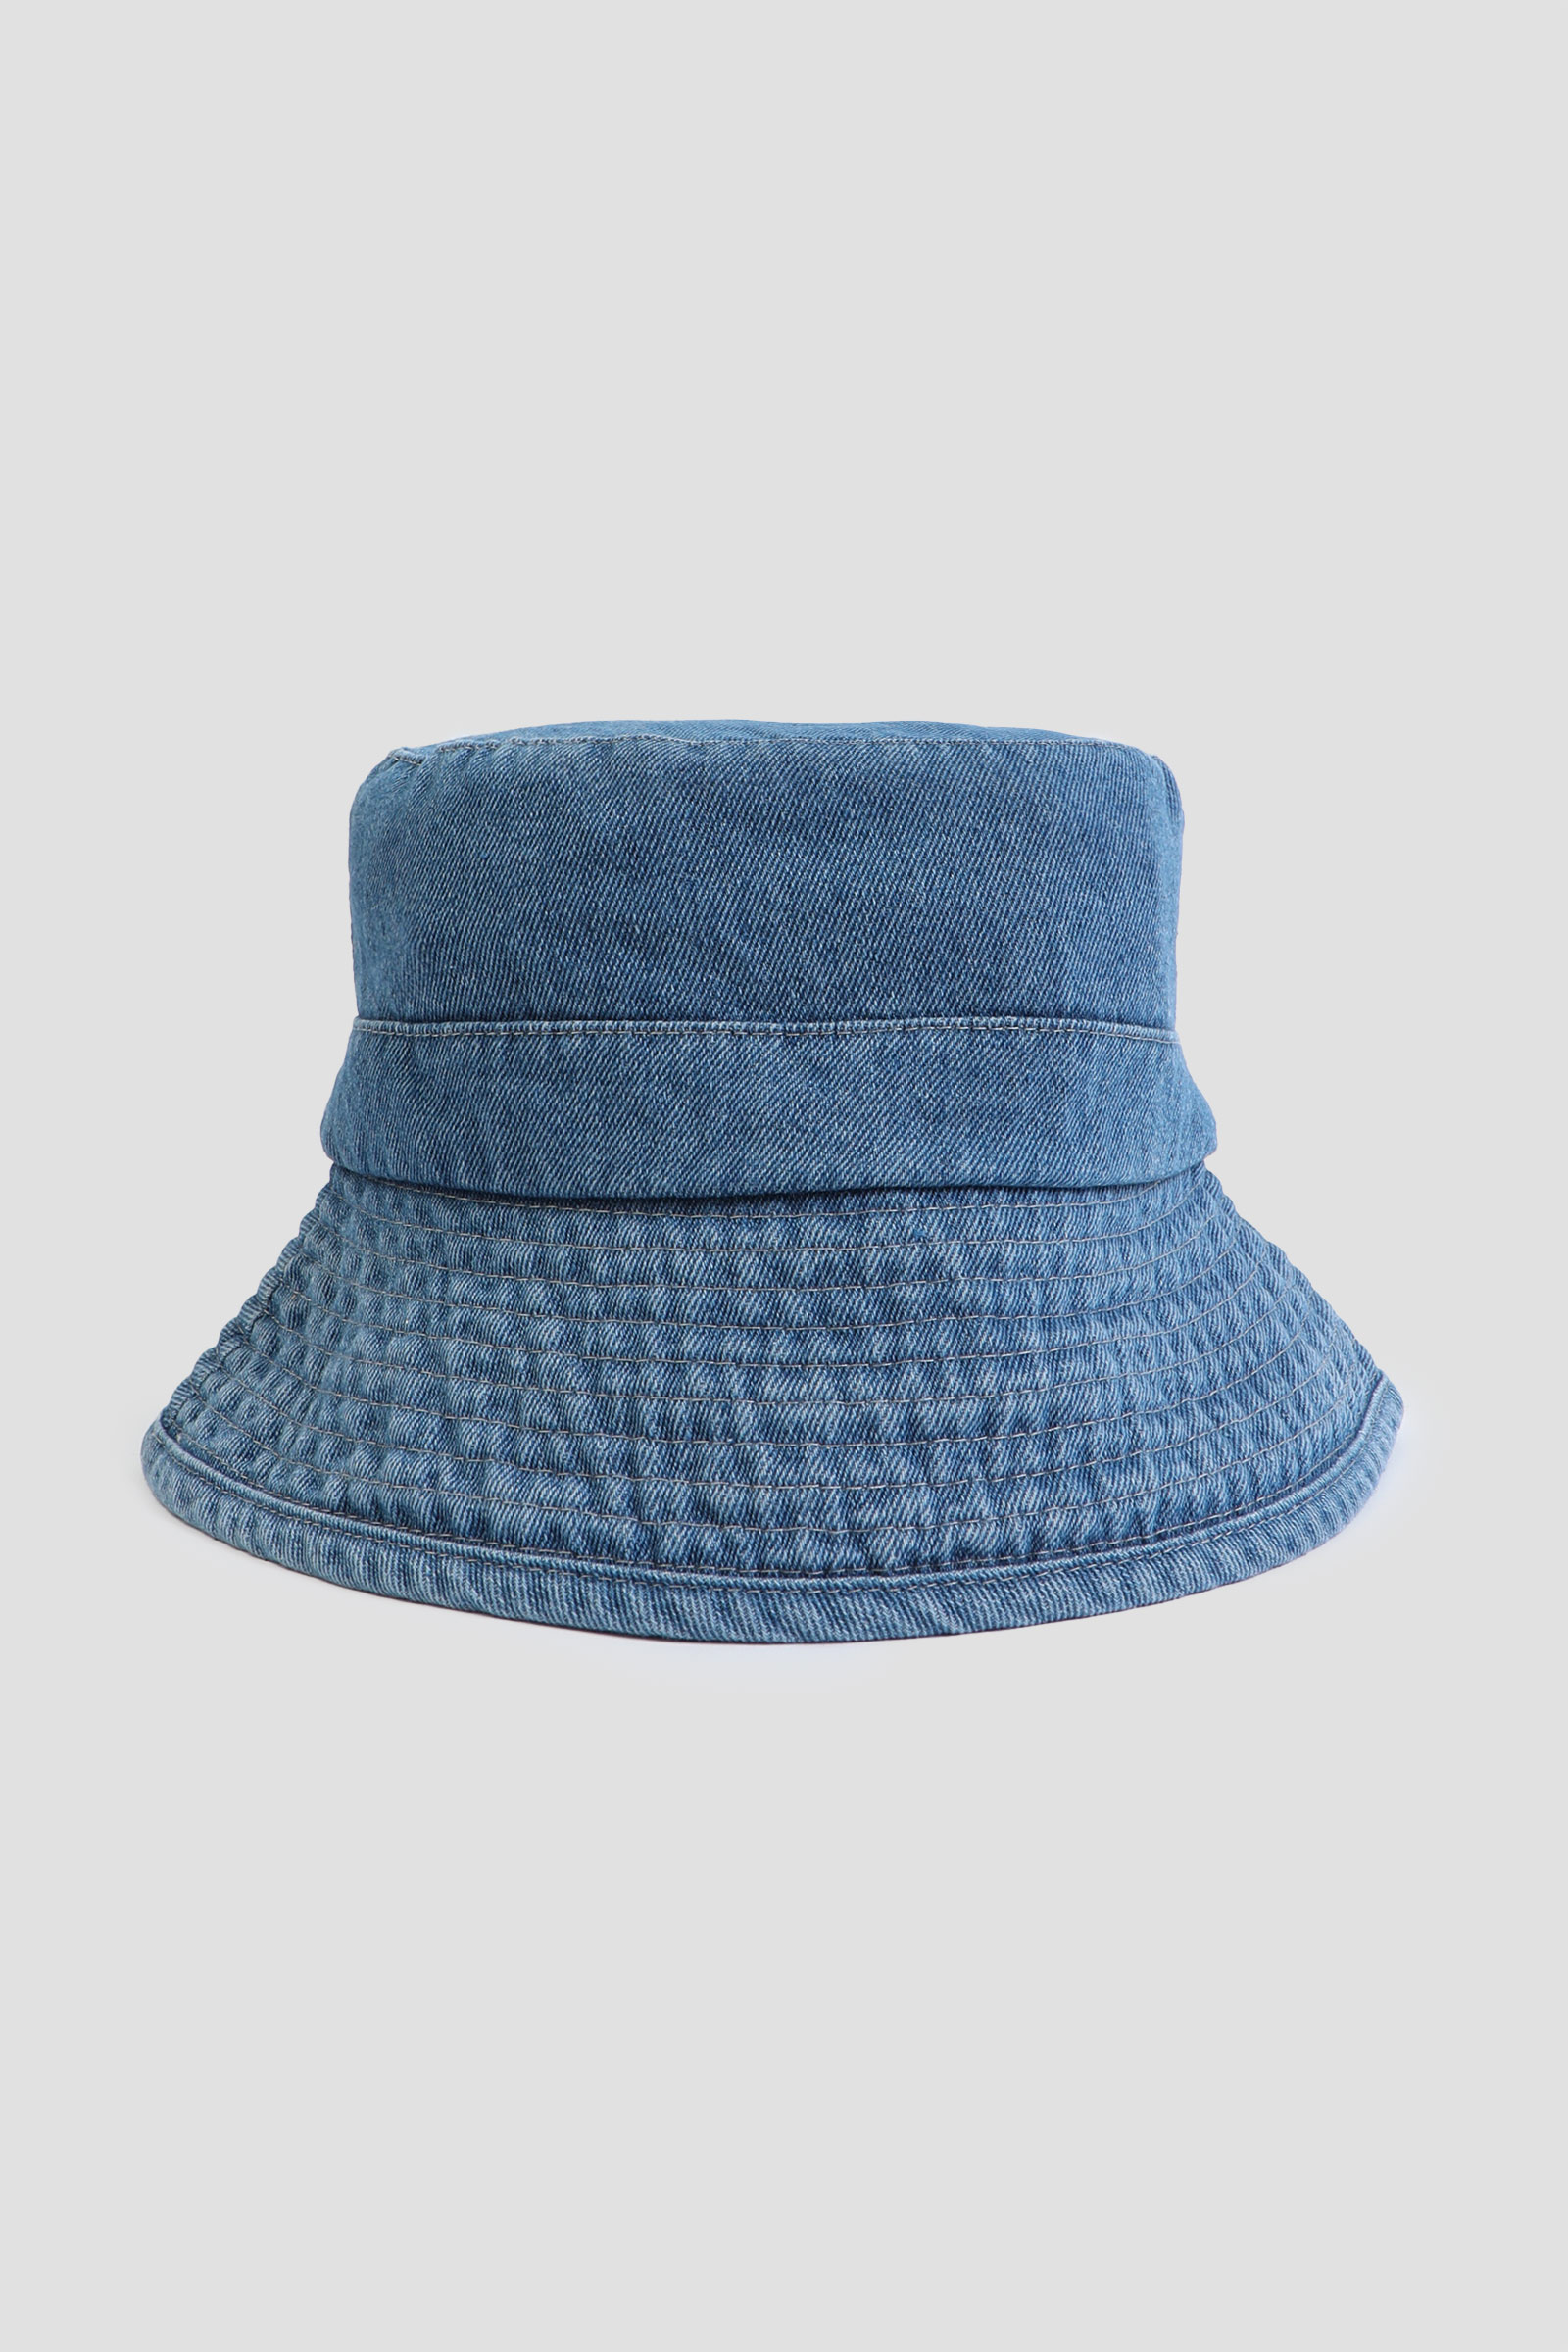 Ardene Denim Bucket Hat in Dark Blue